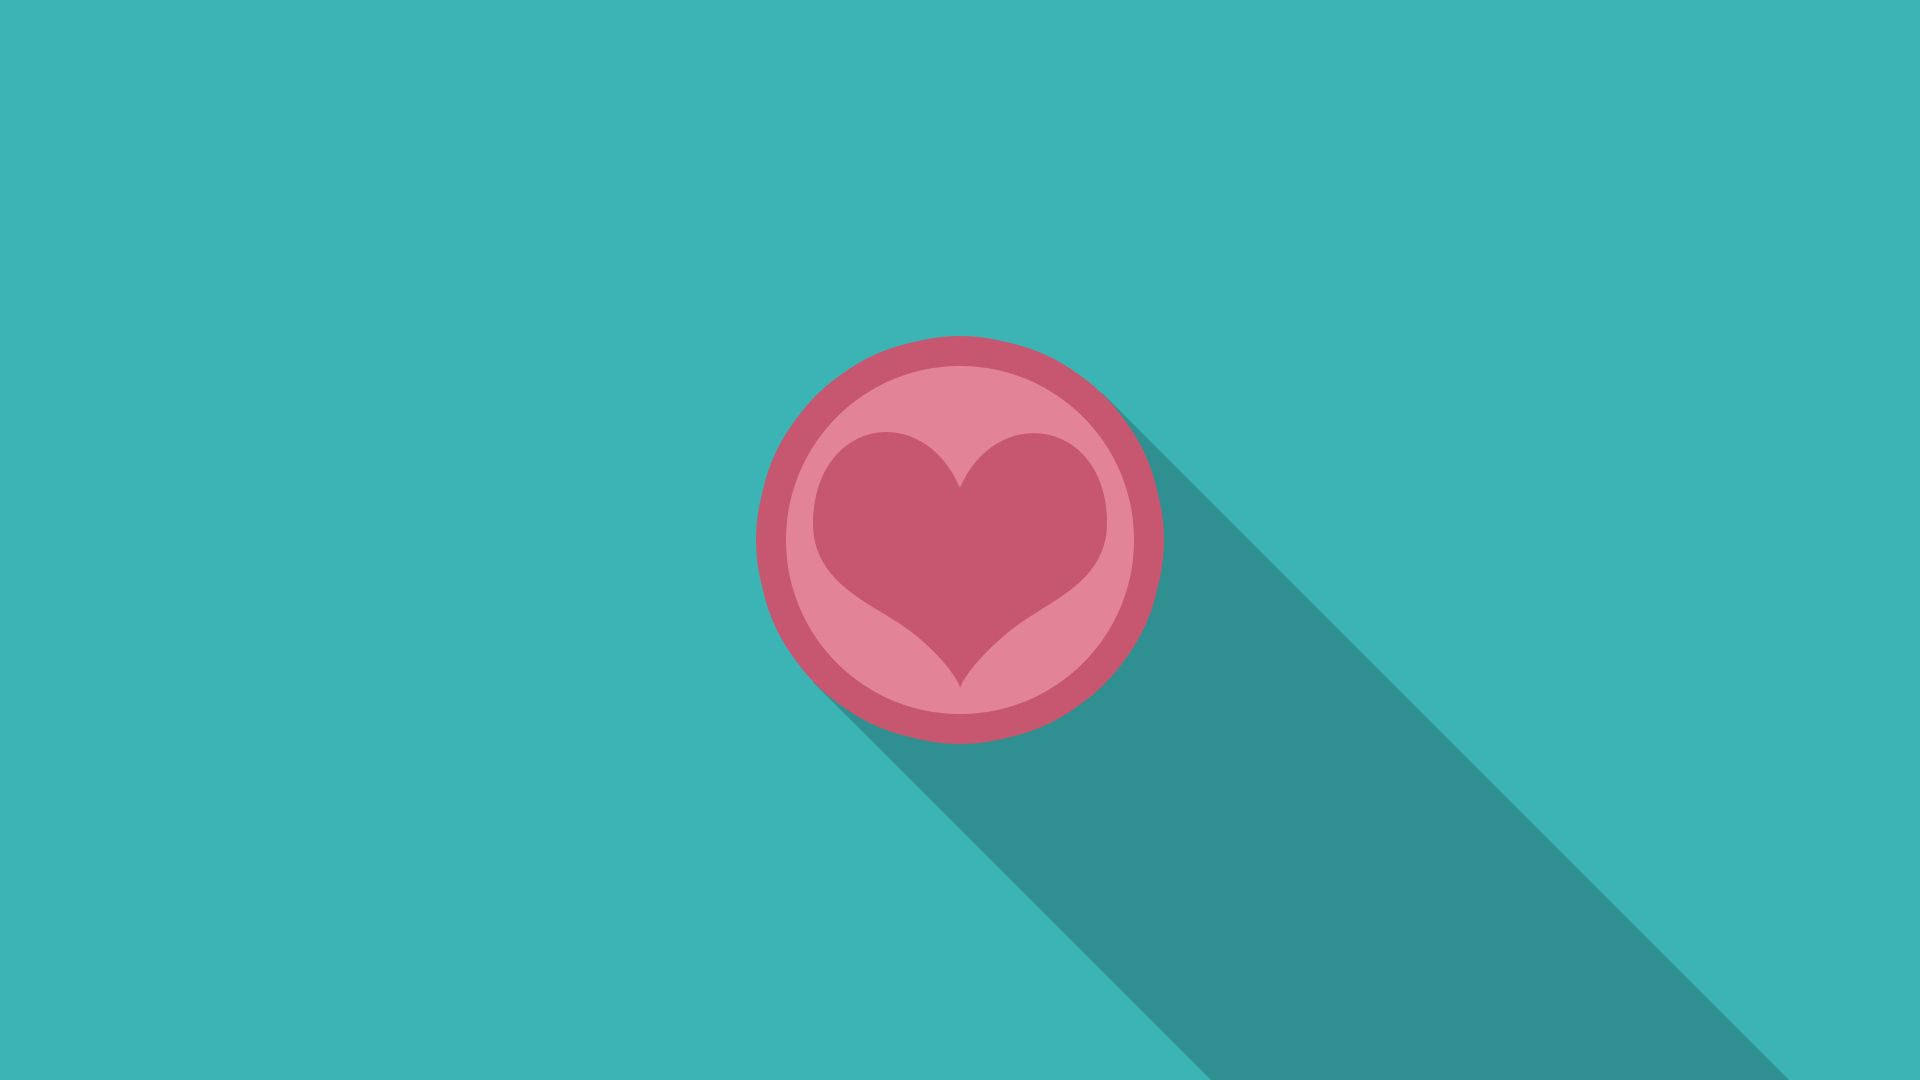 A sweet pink heart on a blue, minimalist surface. Wallpaper